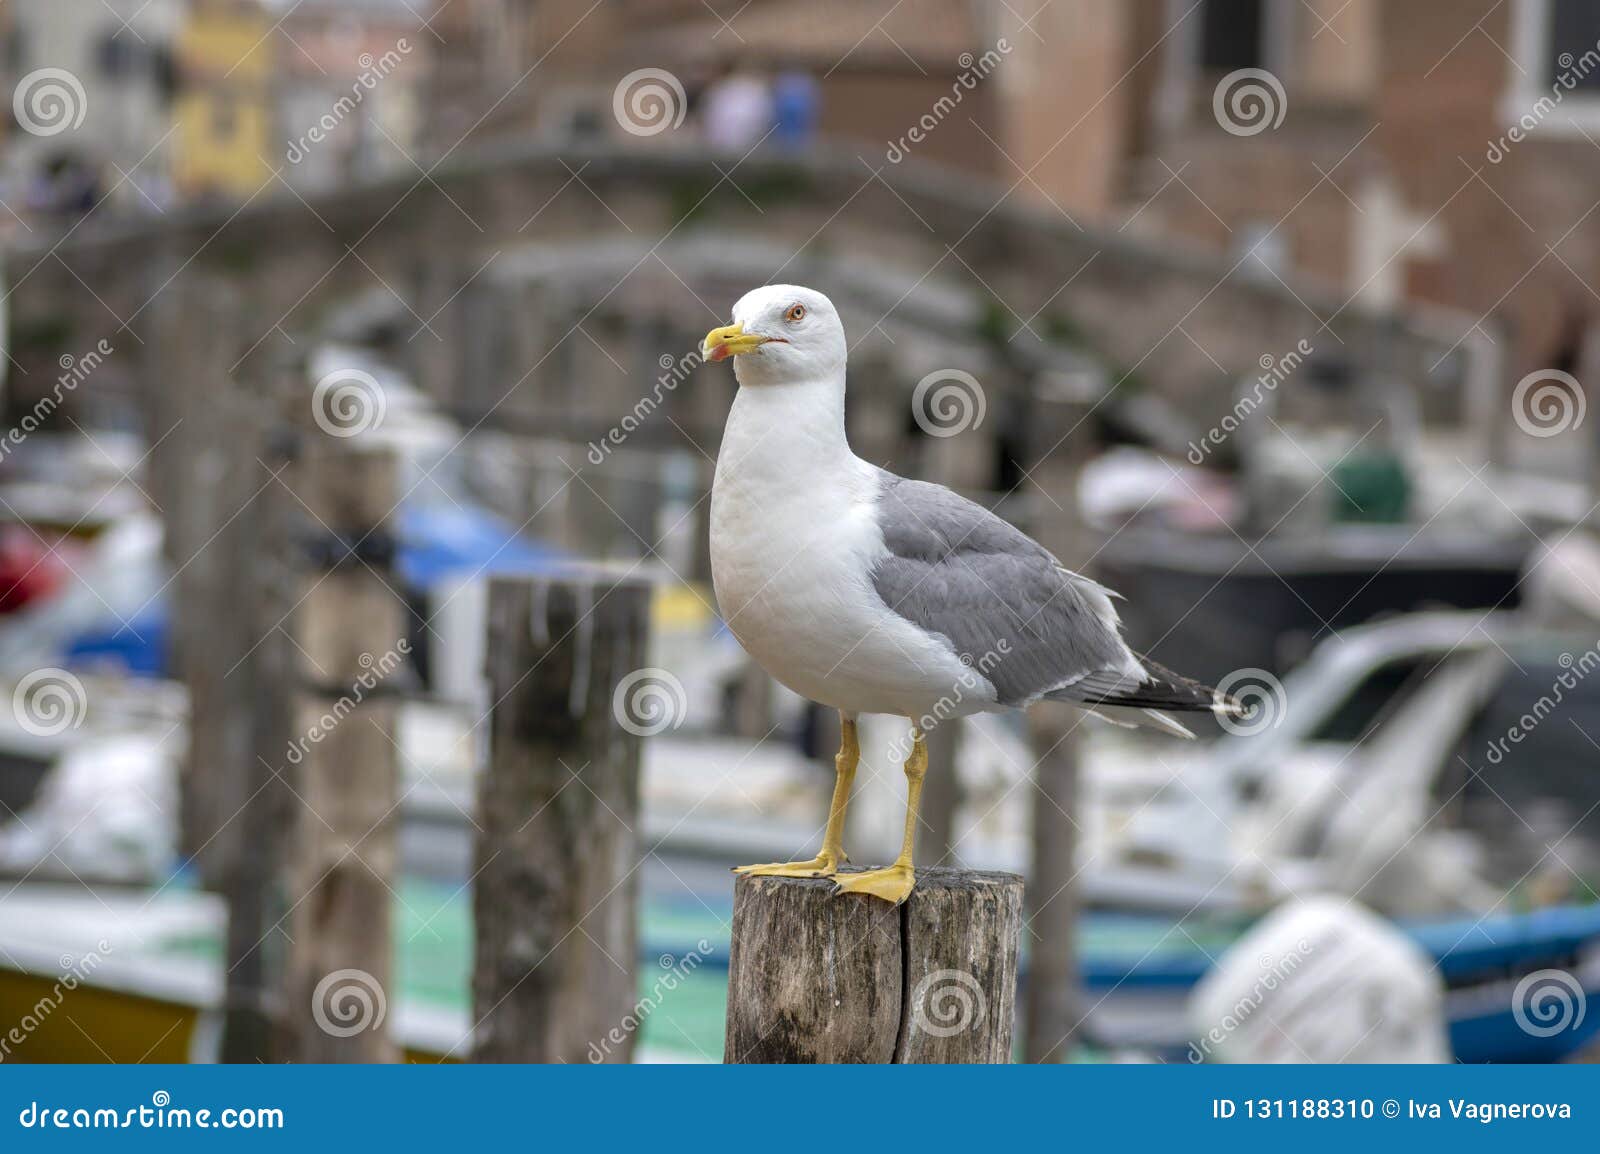 larus michahellis italian bird, yellow-legged gull on wooden bricole in chioggia town